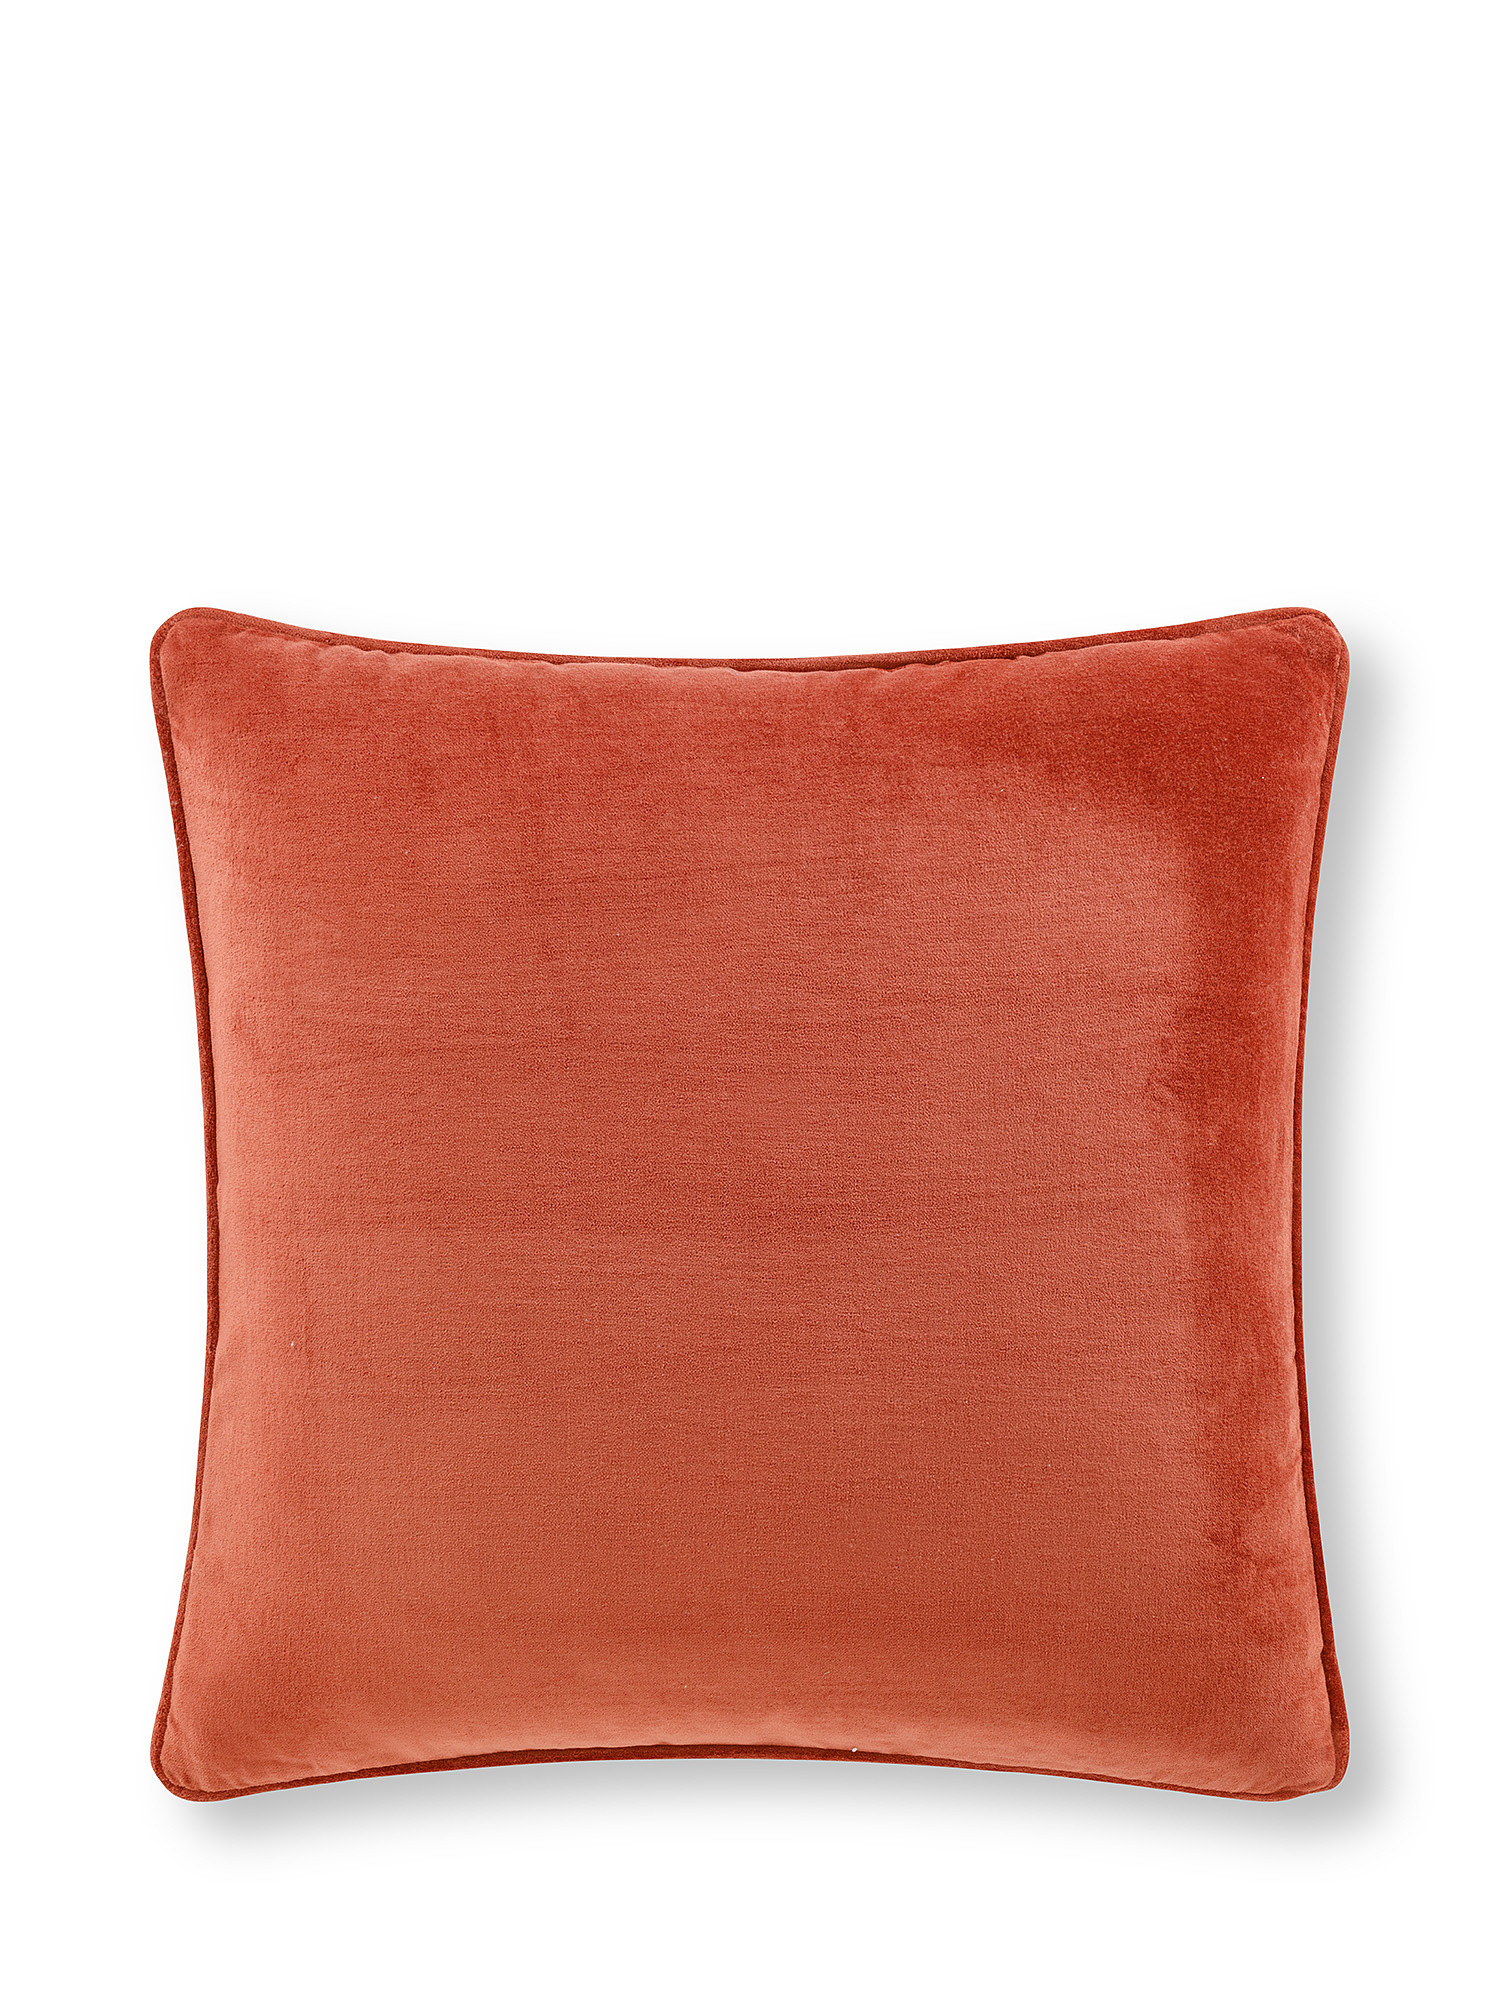 Plain velvet cushion 45x45cm, Brown, large image number 0